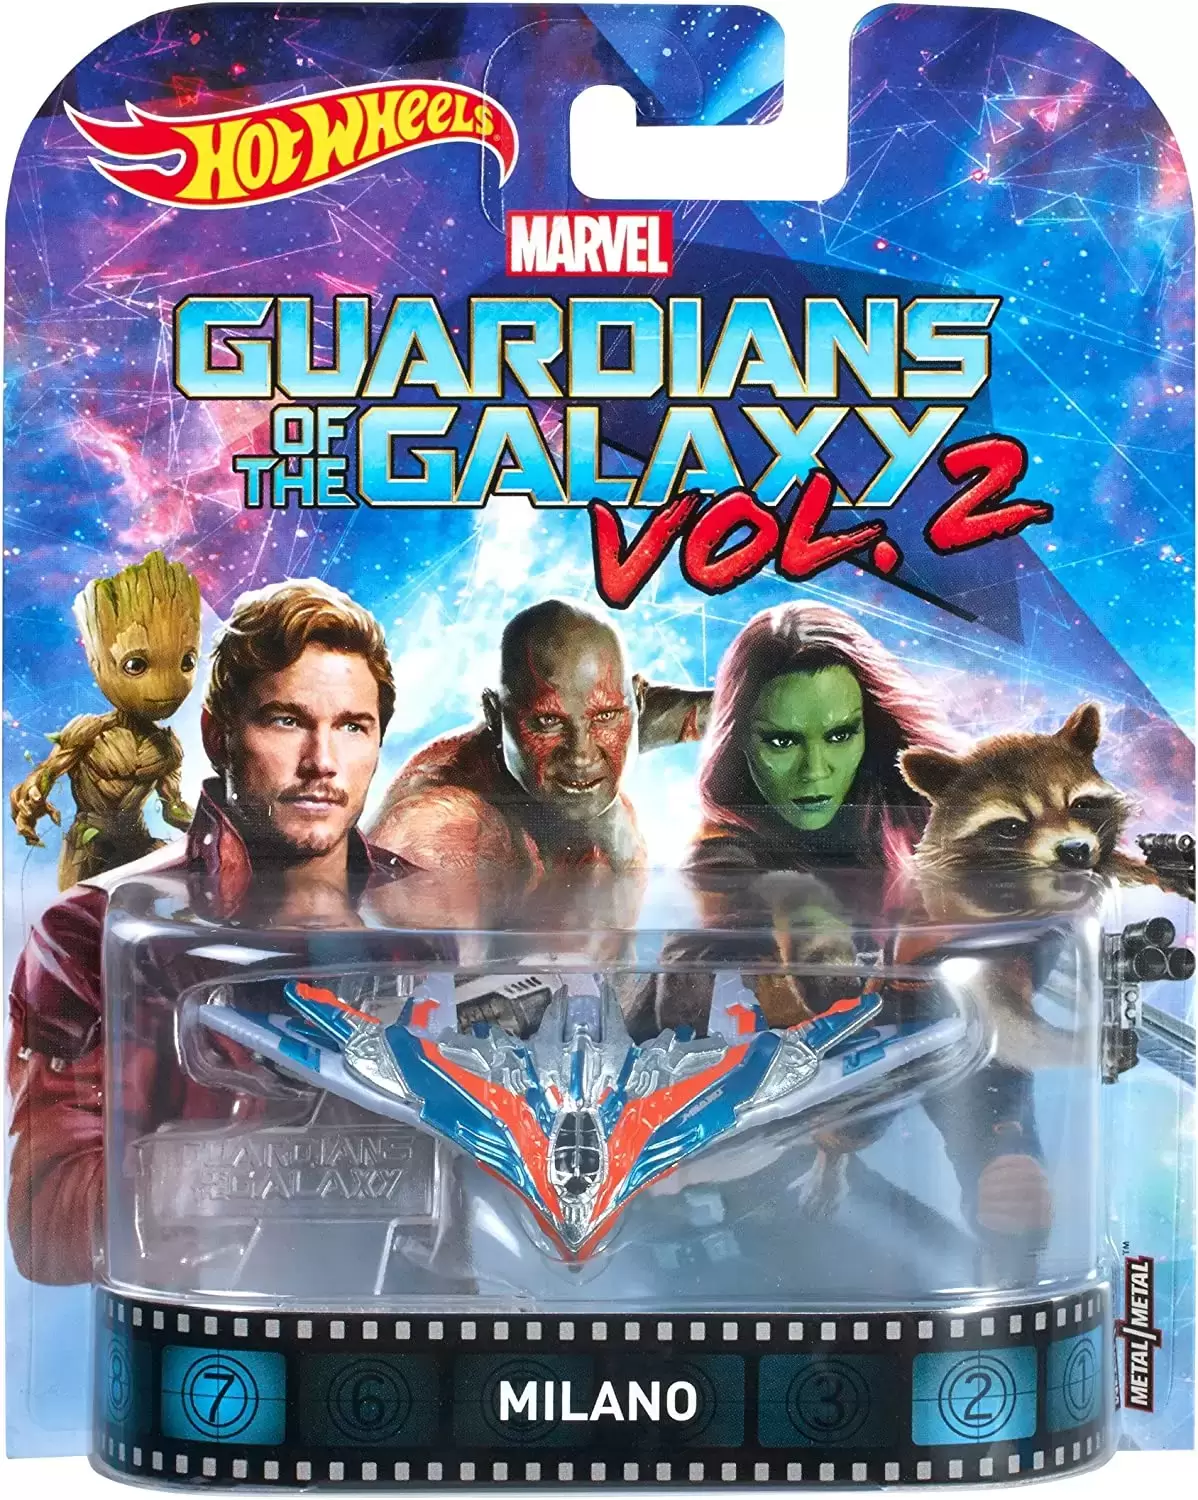 Retro Entertainment Hot Wheels - Guardians of the Galaxy Vol. 2 - Milano